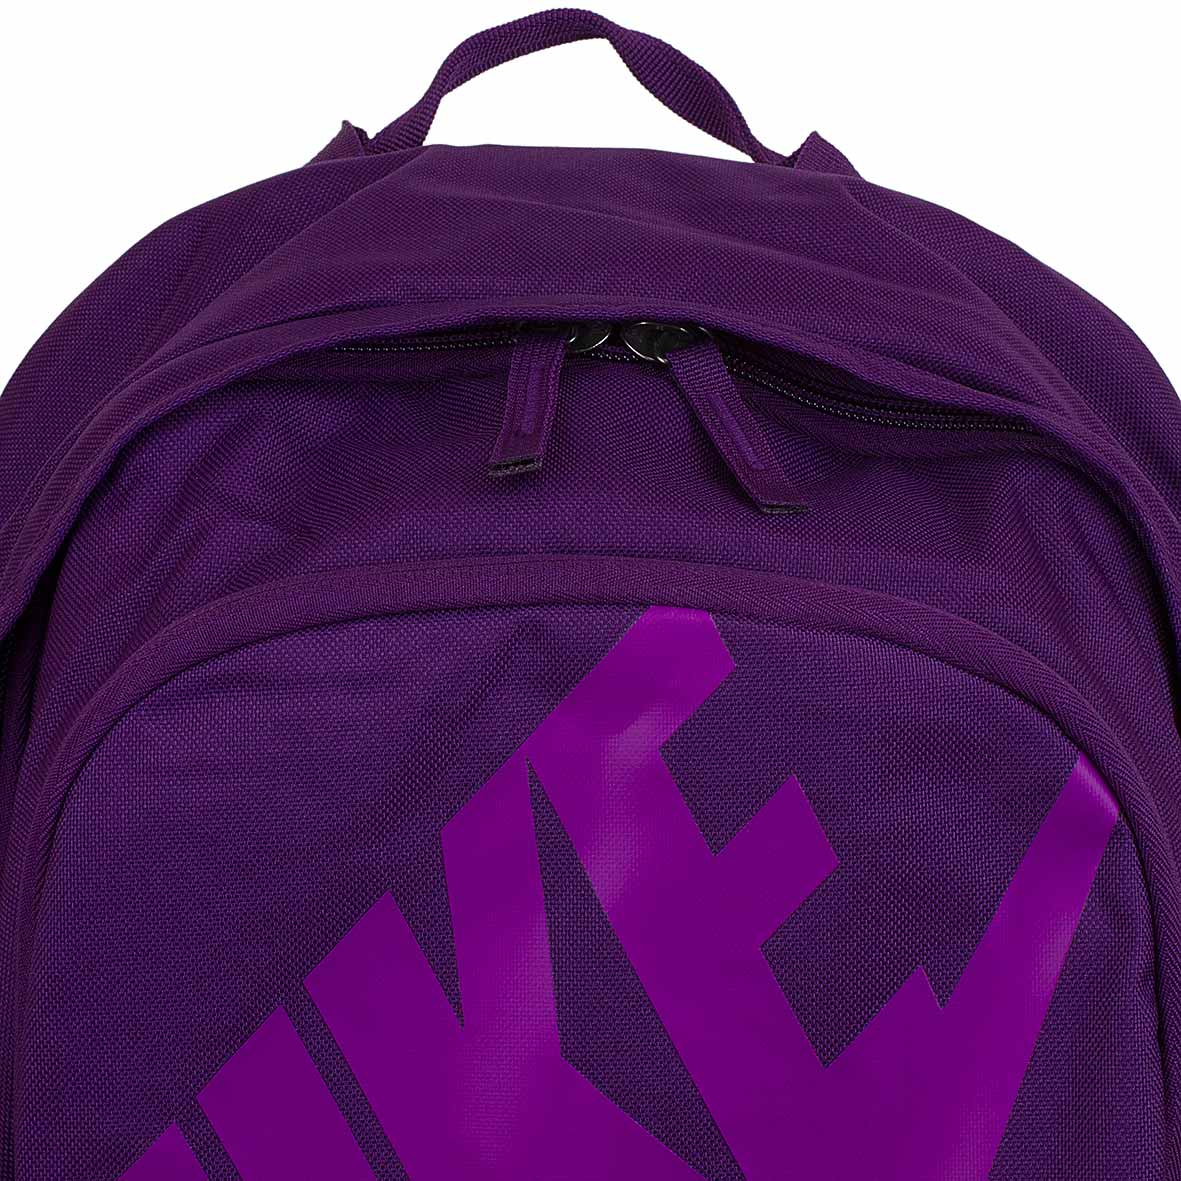 ☆ Nike Rucksack Hayward Futura 2.0 purple - hier bestellen!